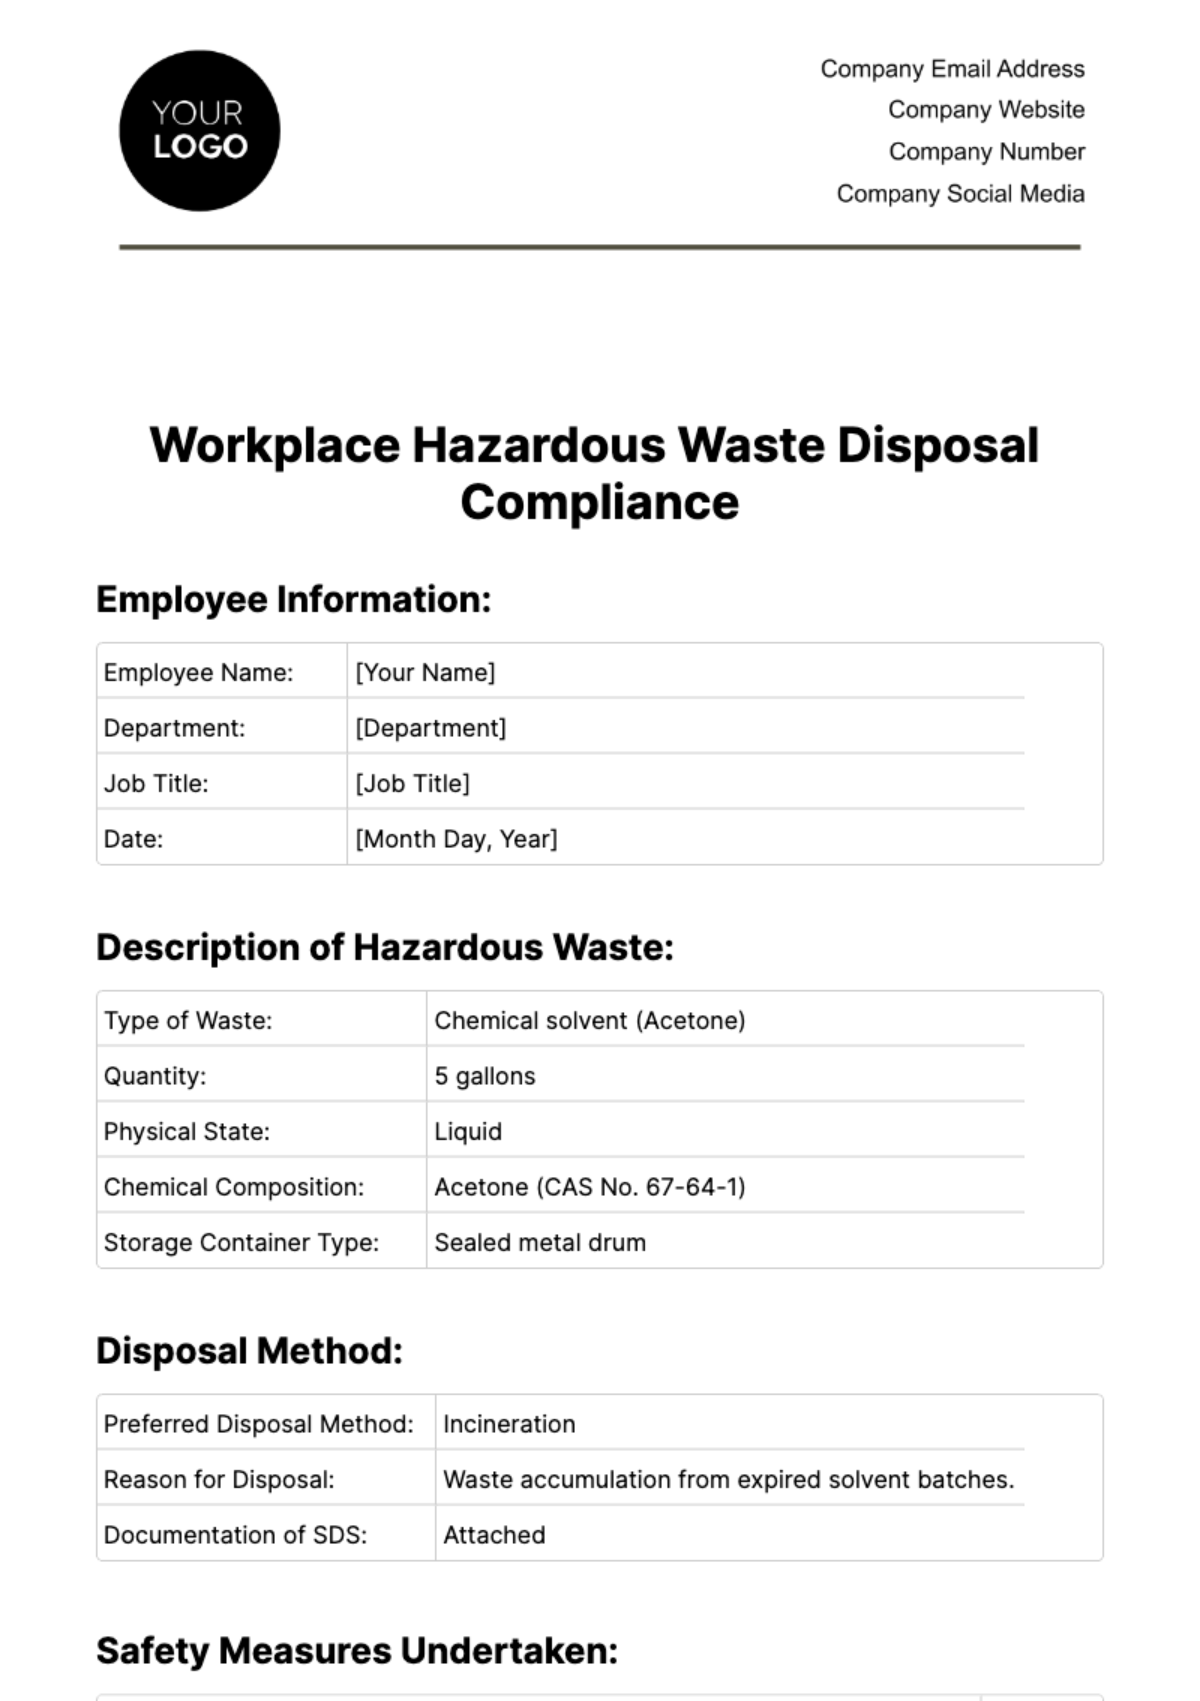 Free Workplace Hazardous Waste Disposal Compliance Template